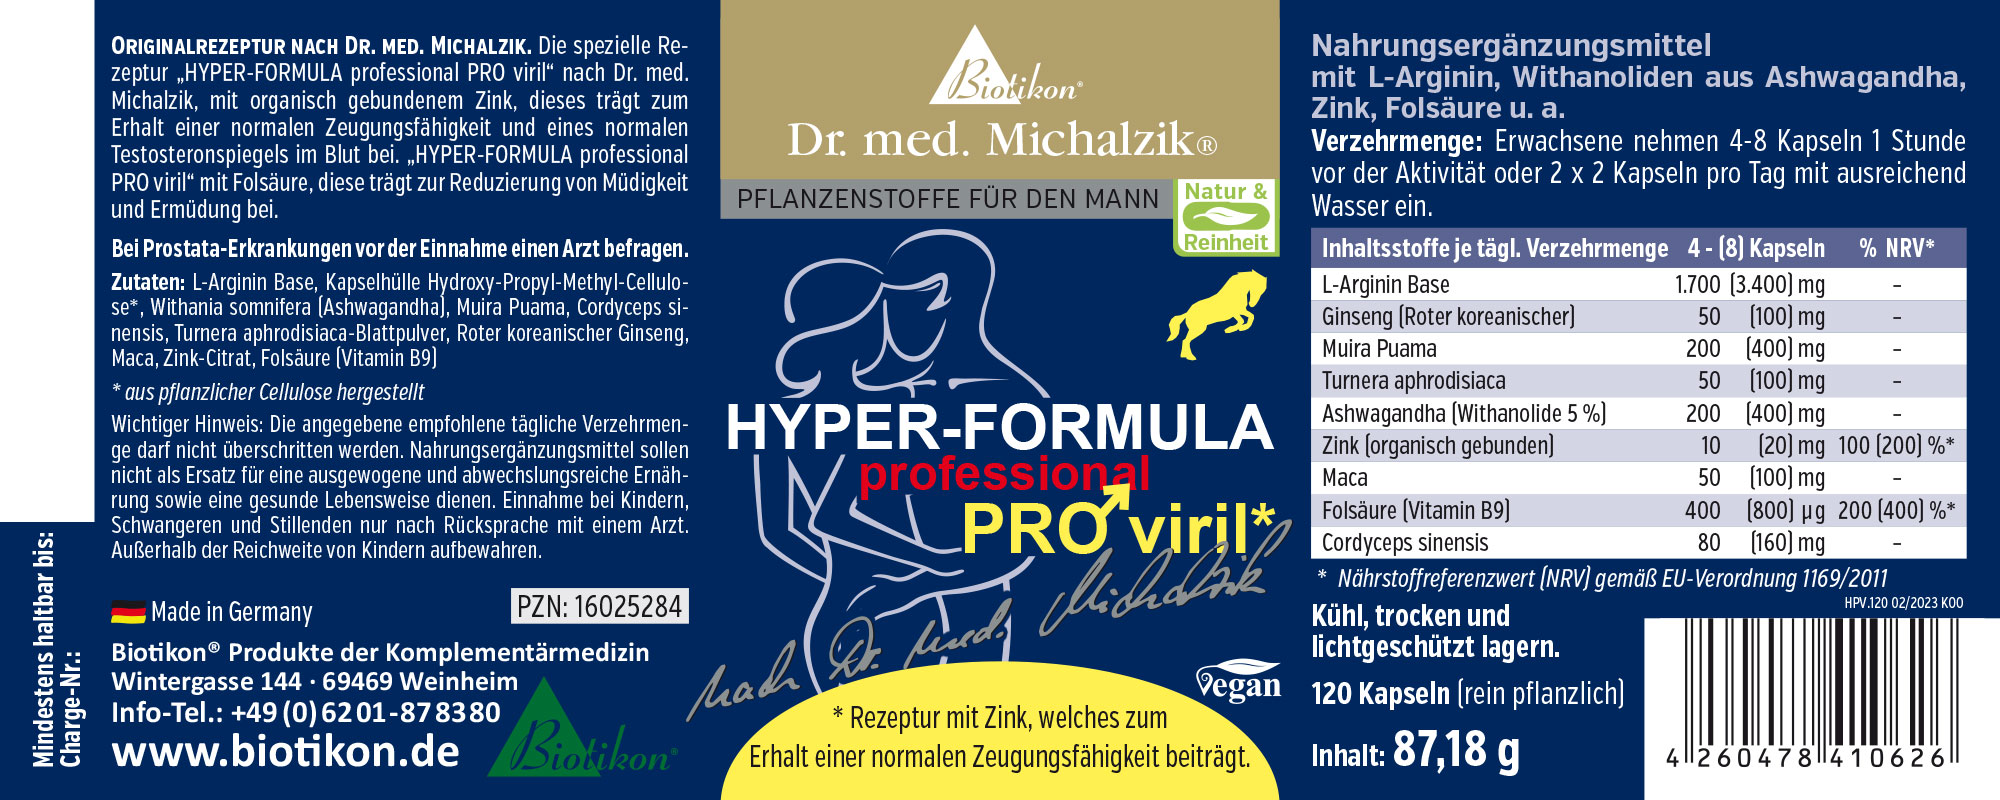 Hyper PRO viril stamina di Dr. med. Michalzik